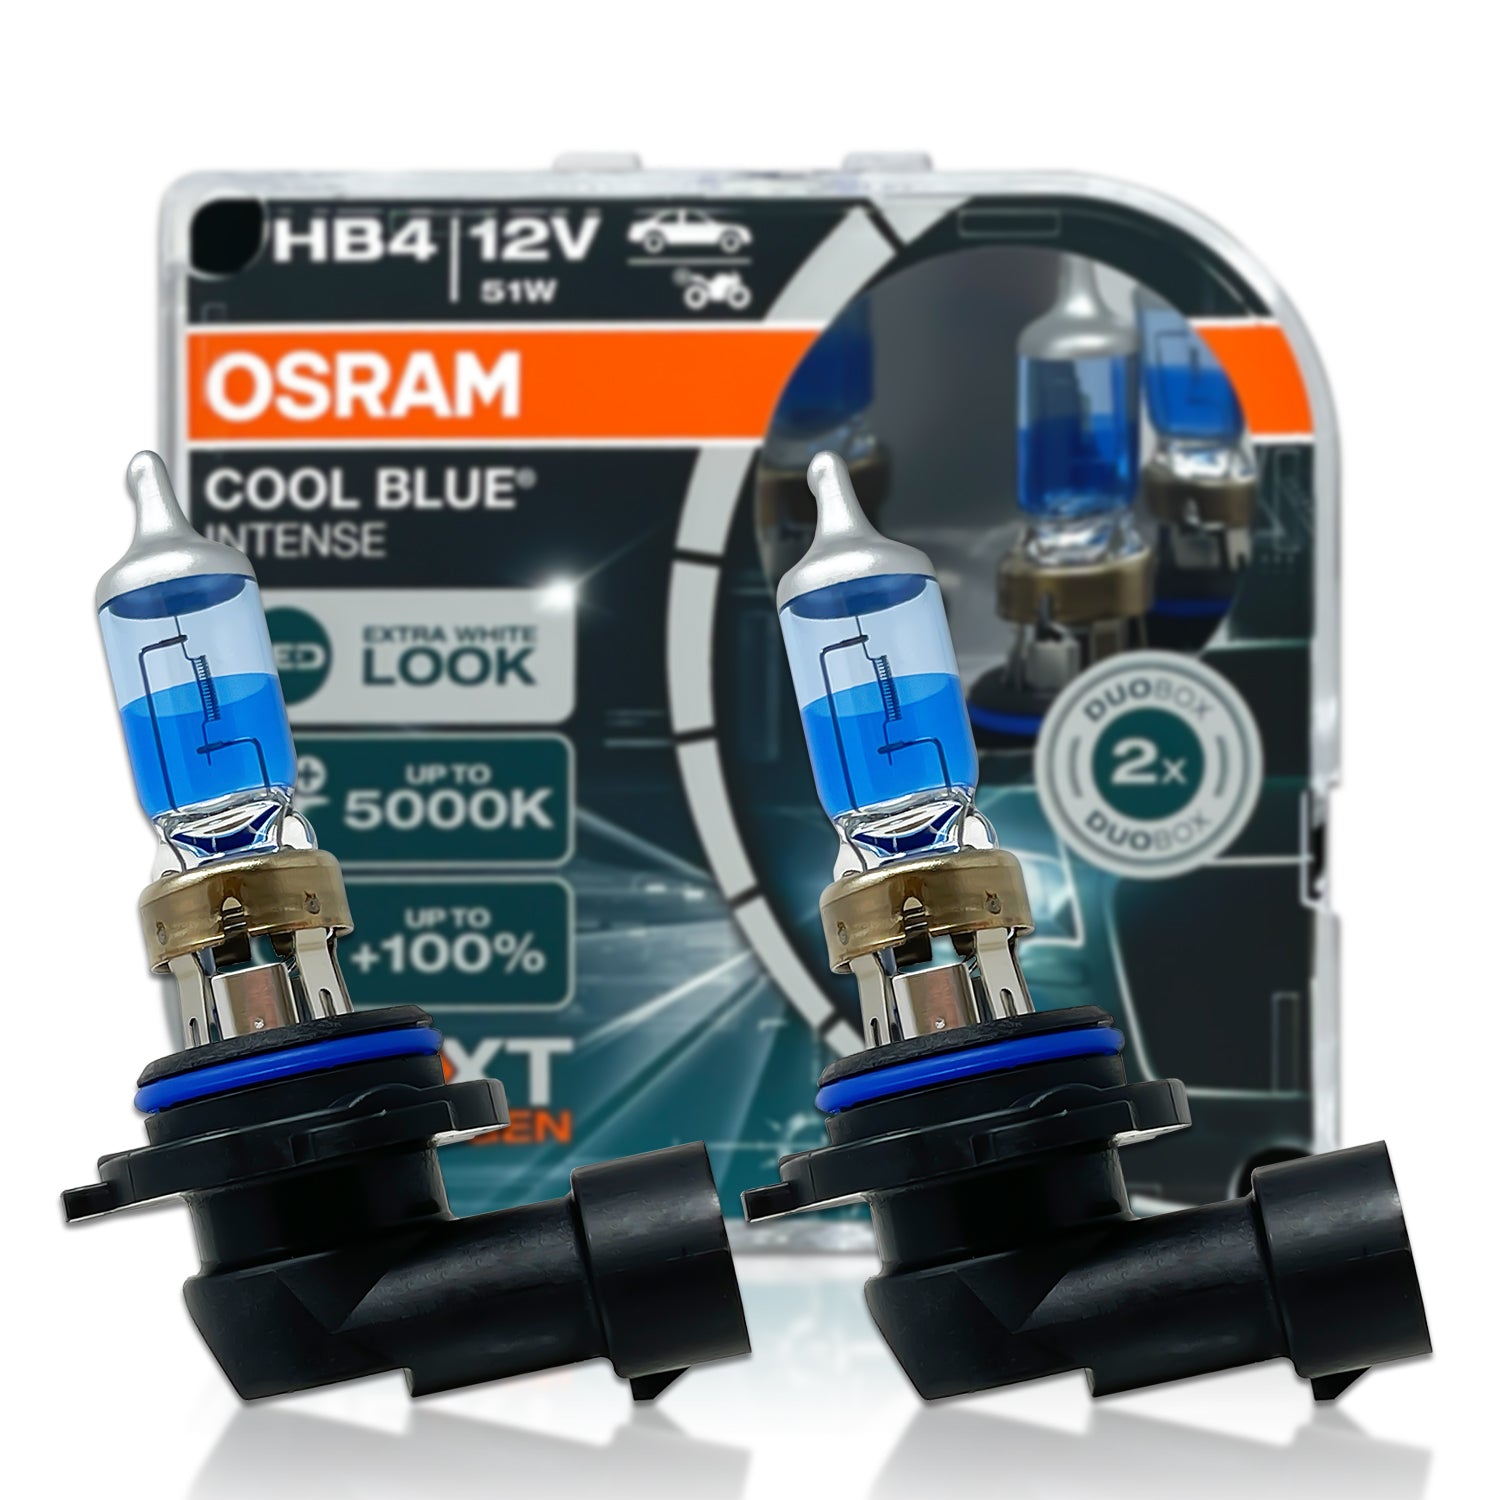 Philips Blue Vision Ultra vs. OSRAM Cool Blue Intense, Bulb Comparison